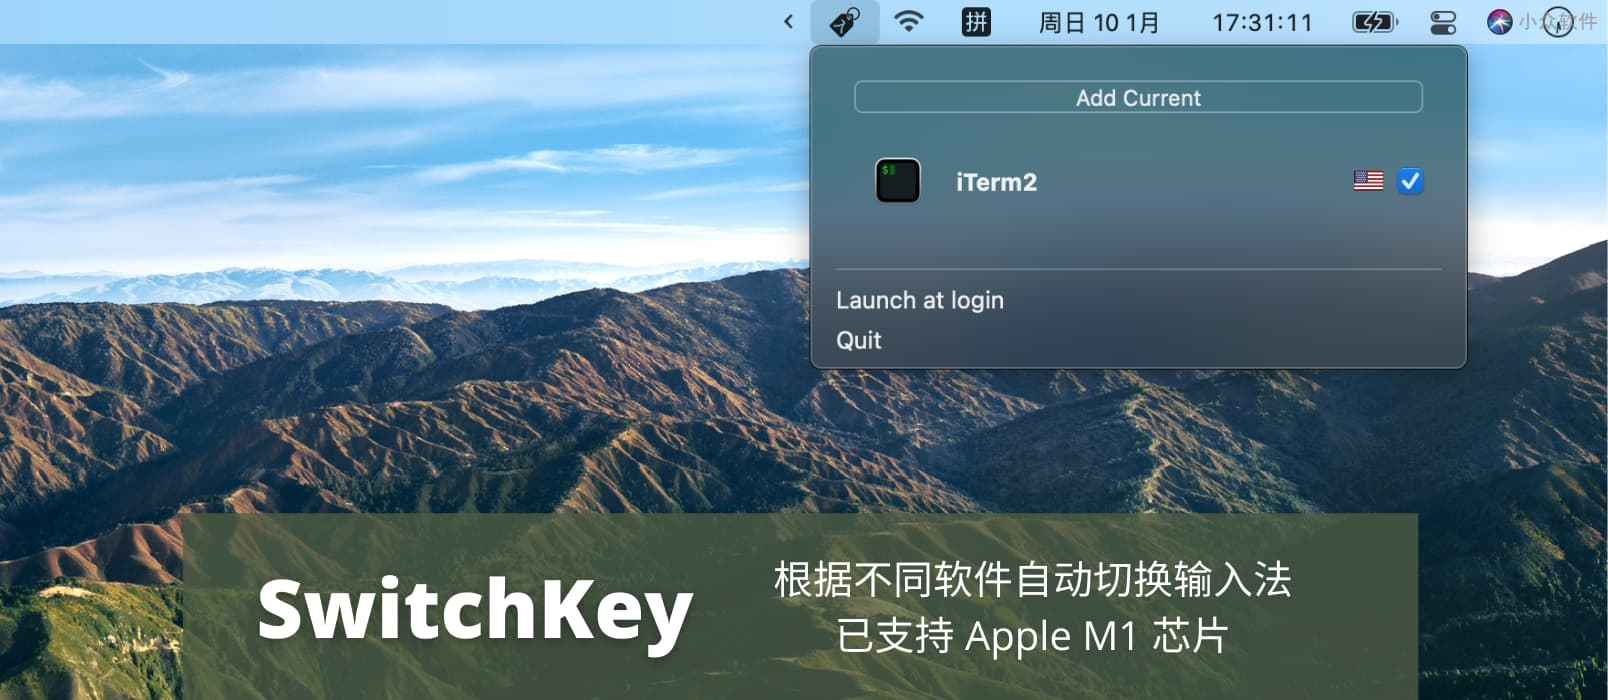 SwitchKey – 根据不同软件自动切换输入法，已支持 Apple M1 芯片[macOS]